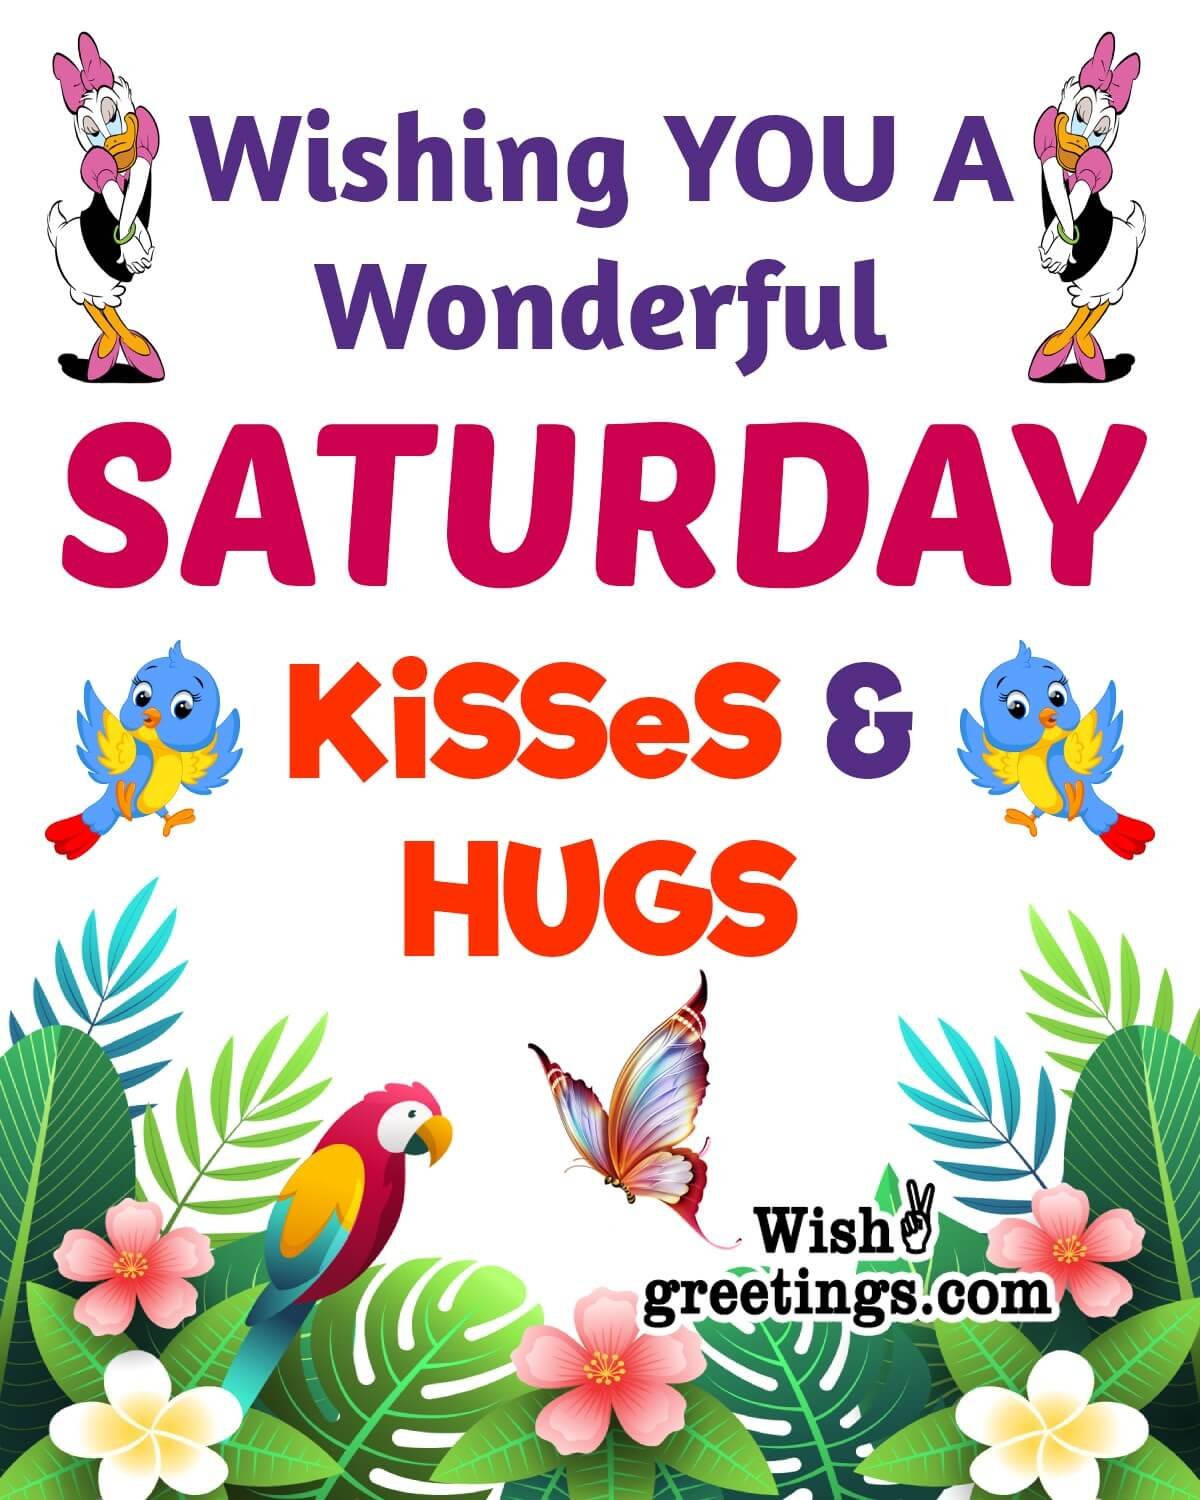 Wishing Wonderful Saturday Kisses & Hugs